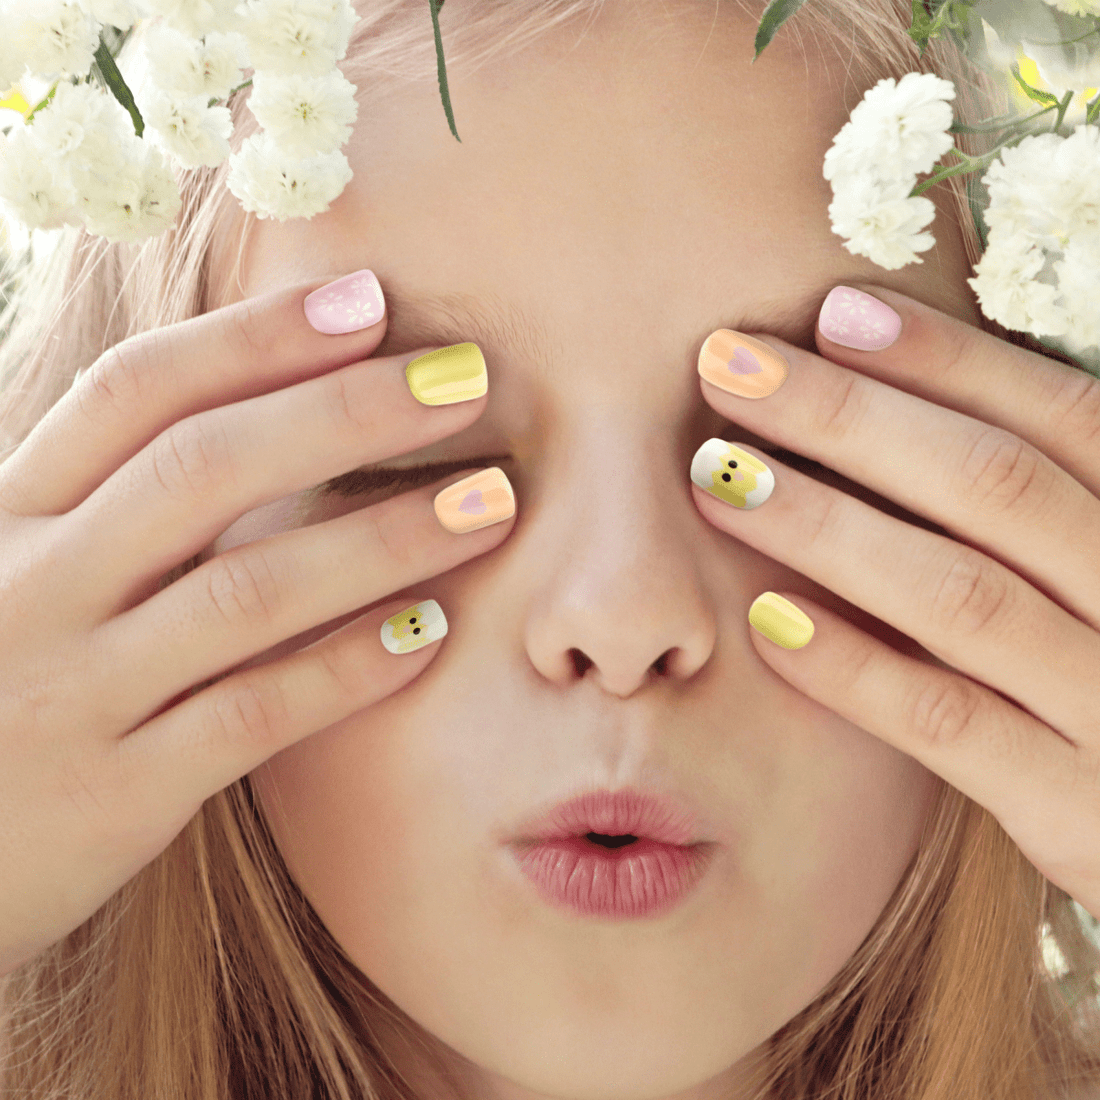 imPRESS MINI Press-On Manicure for Kids - Easter Eggs